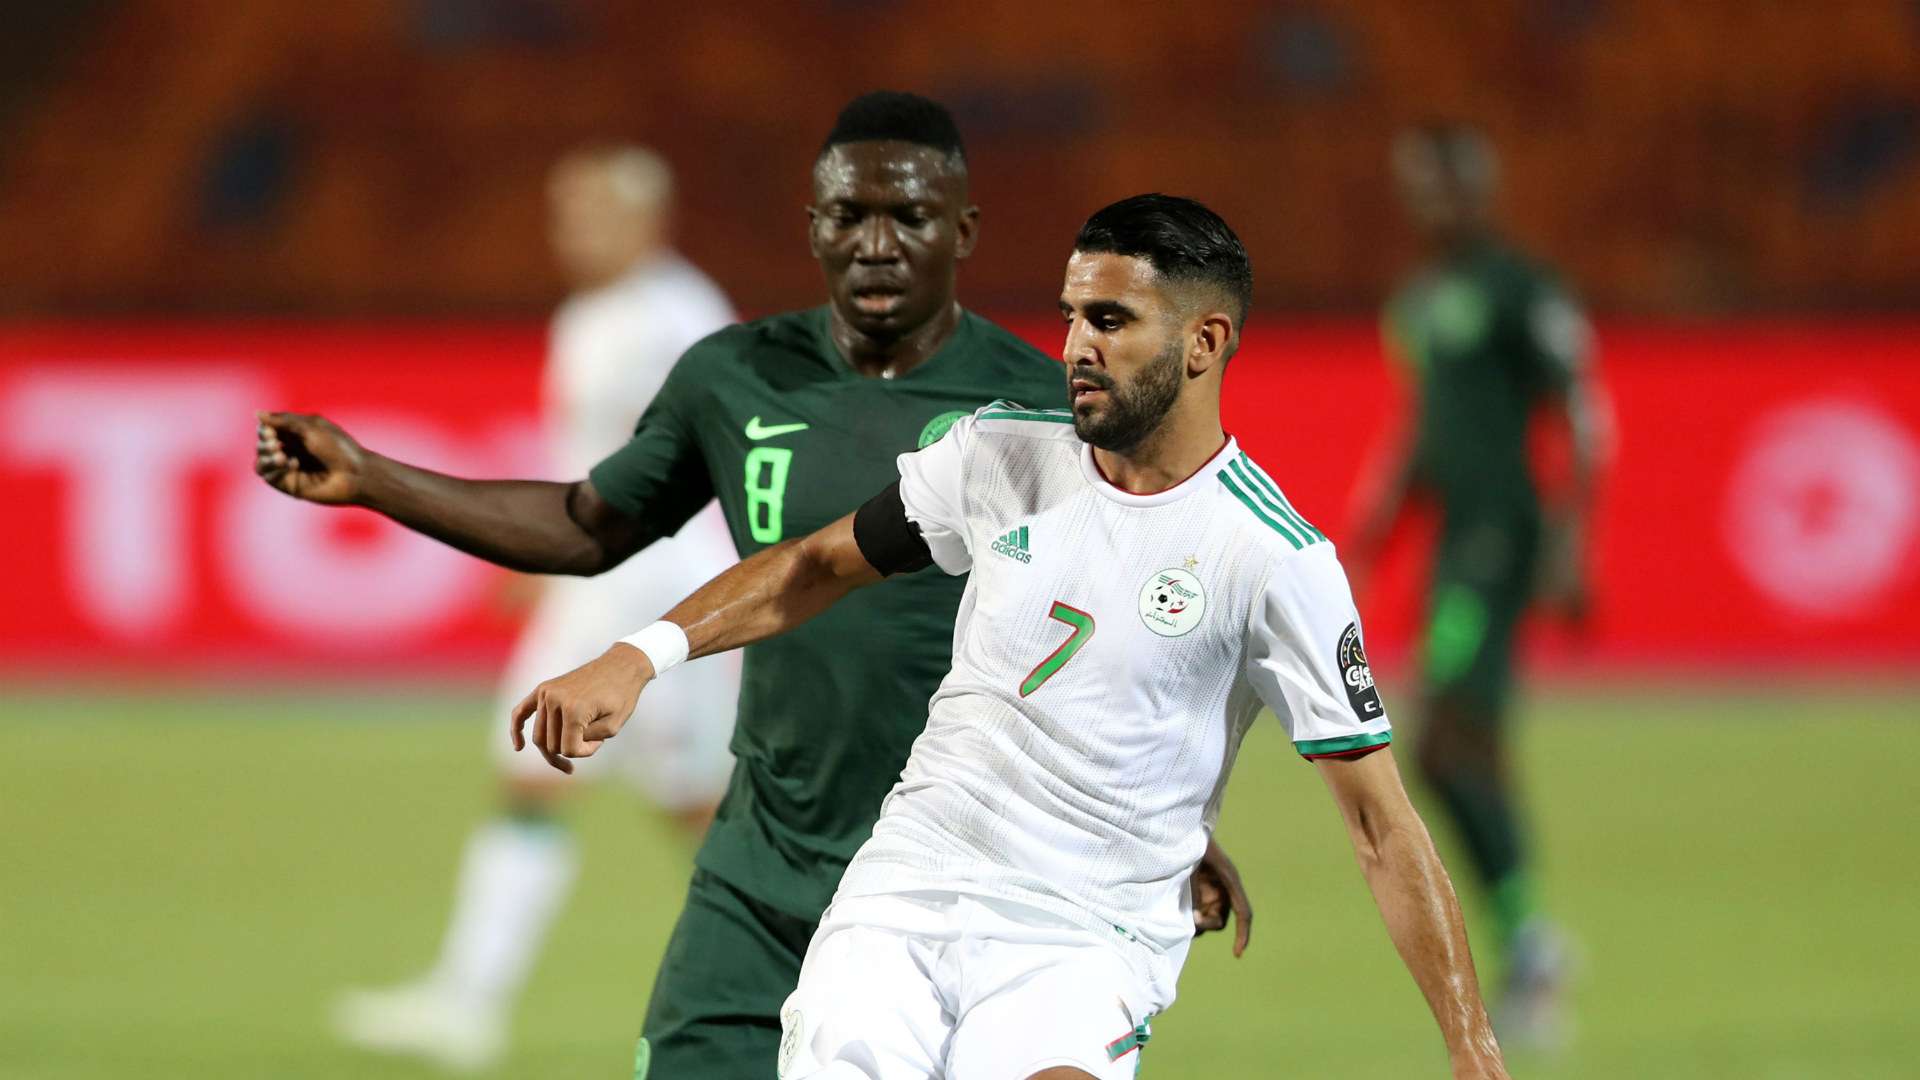 Nigeria’s Oghenekaro Etebo and Algeria’s Riyad Mahrez Afcon 2019